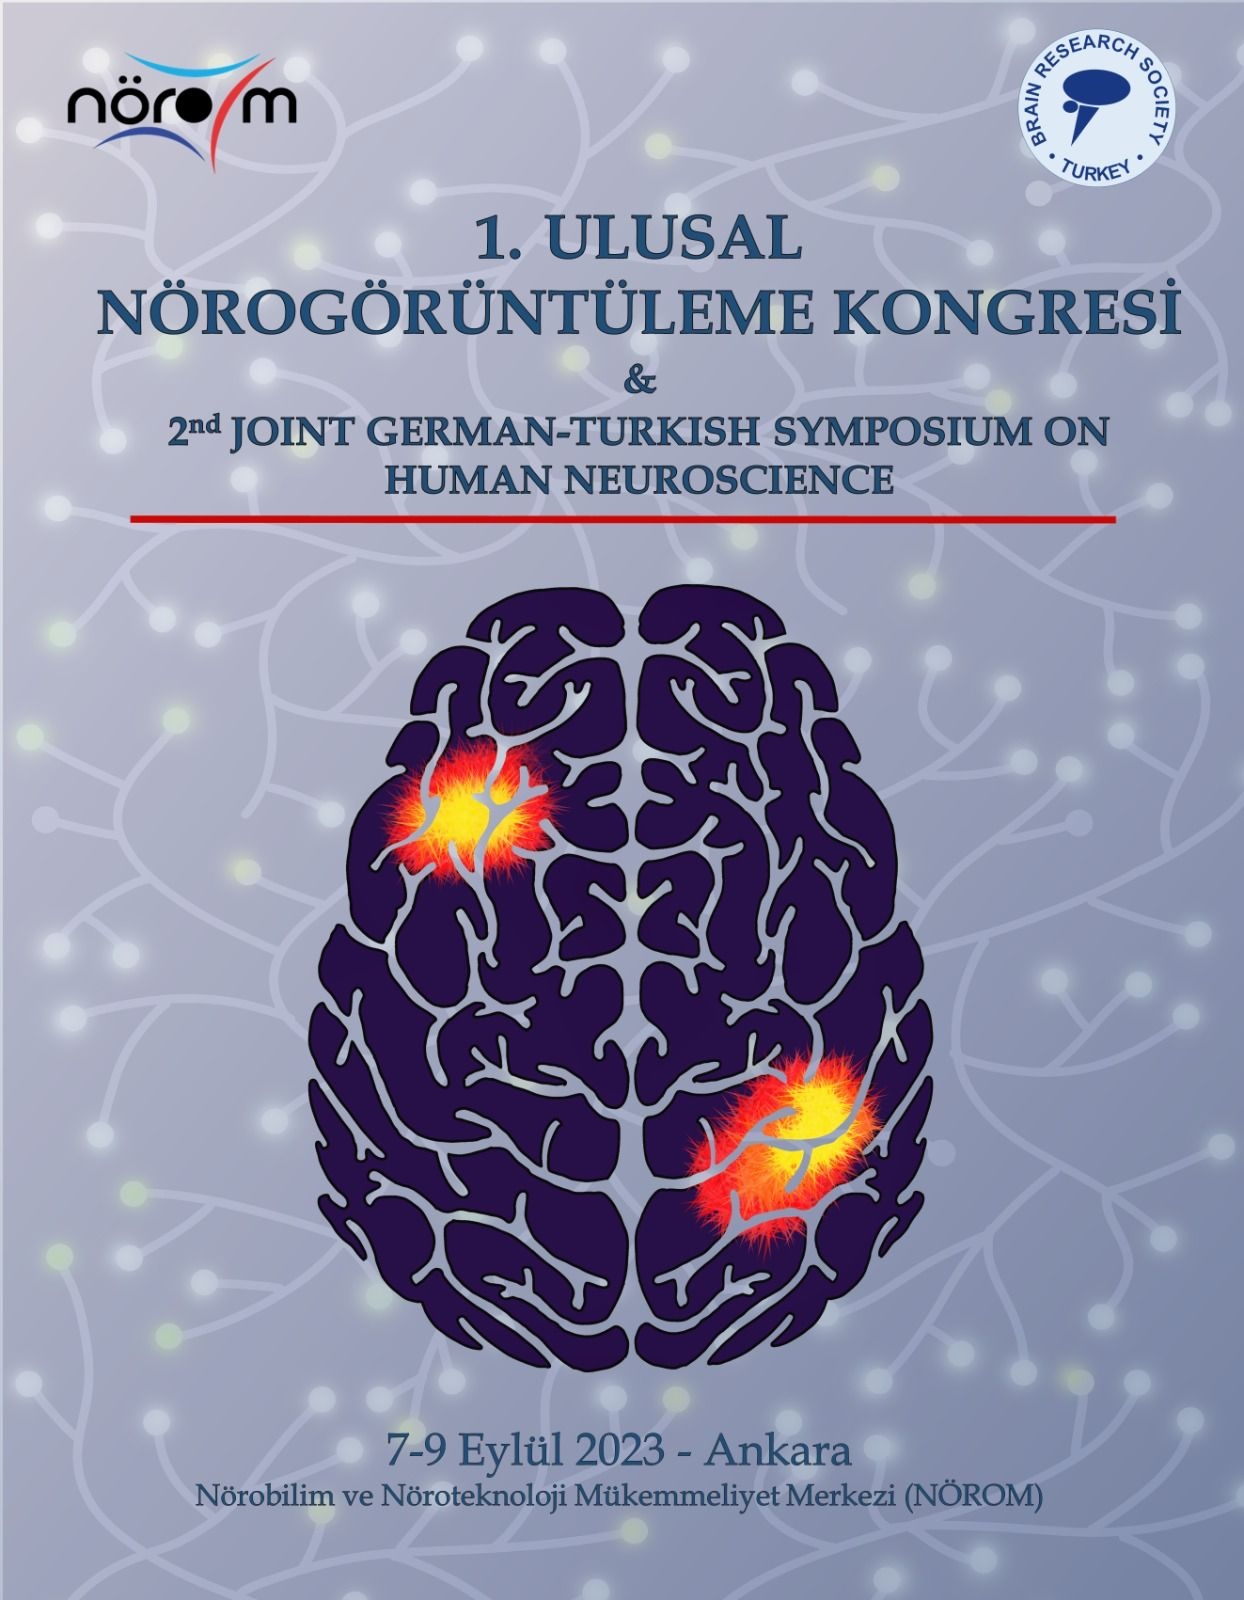 1. Ulusal Nörogörüntüleme Kongresi & 2nd Joint German-Turkish Symphosium On Human Neuroscience Poster-1